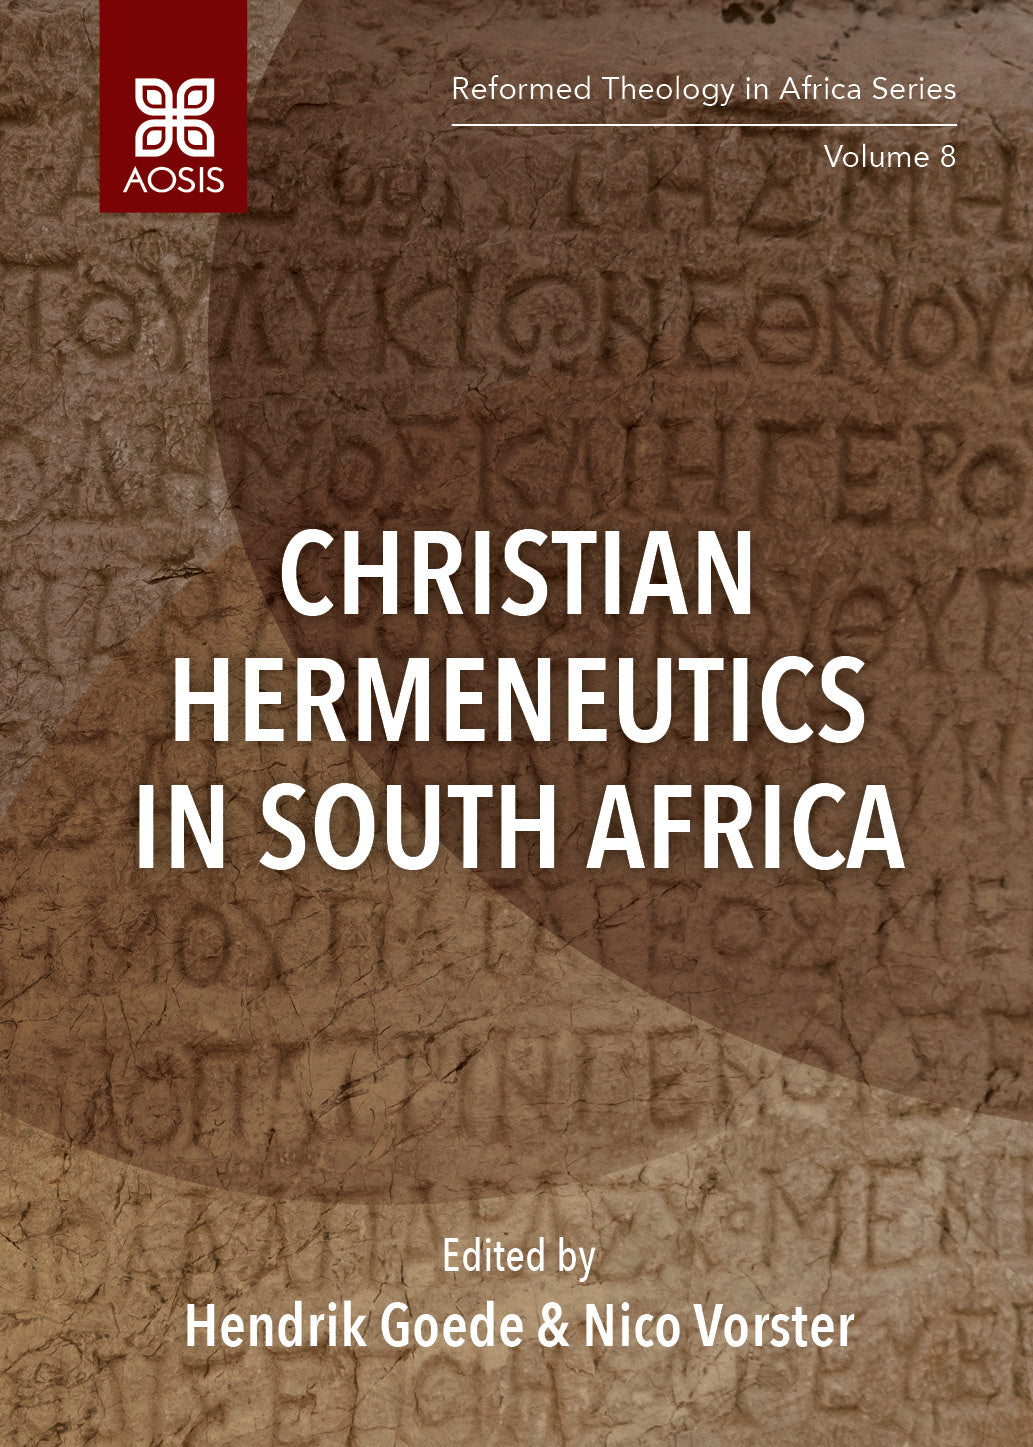 Christian hermeneutics in South Africa